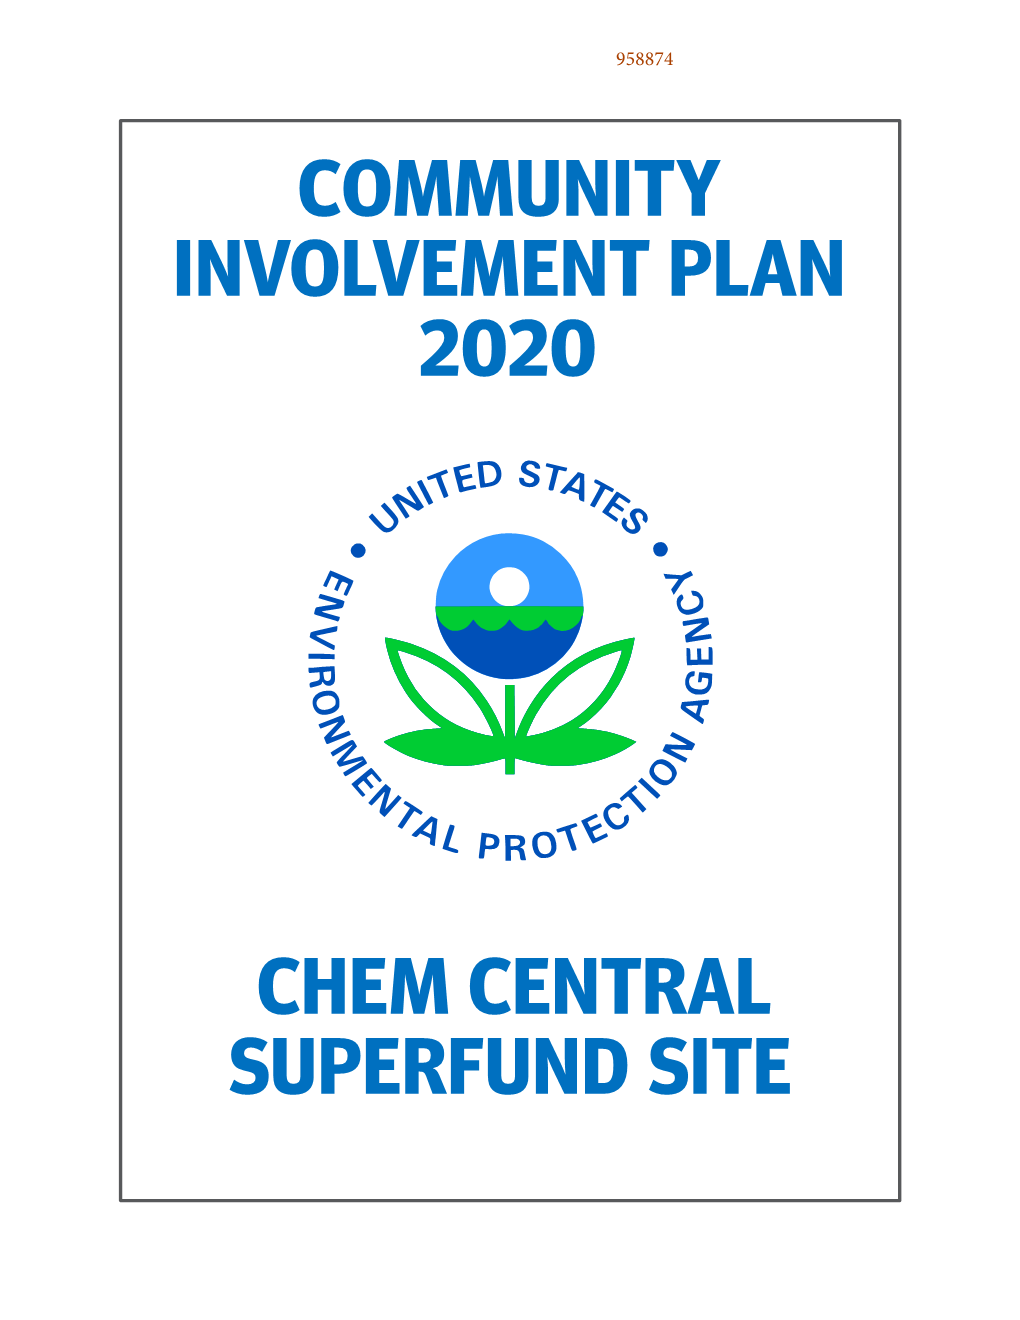 EPA’S Community Engagement Goals